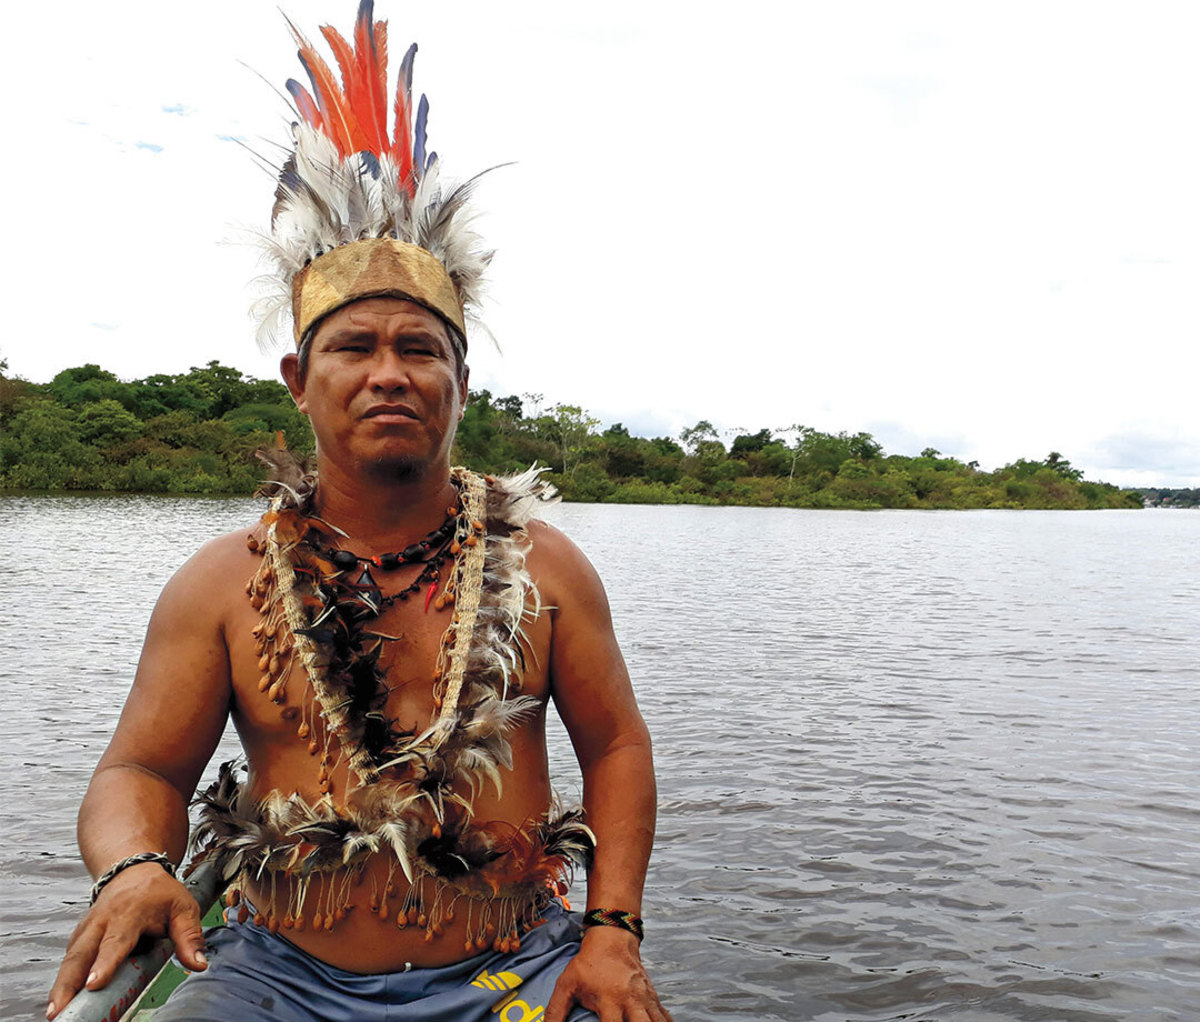 Indigenous leader sitting in boat on river